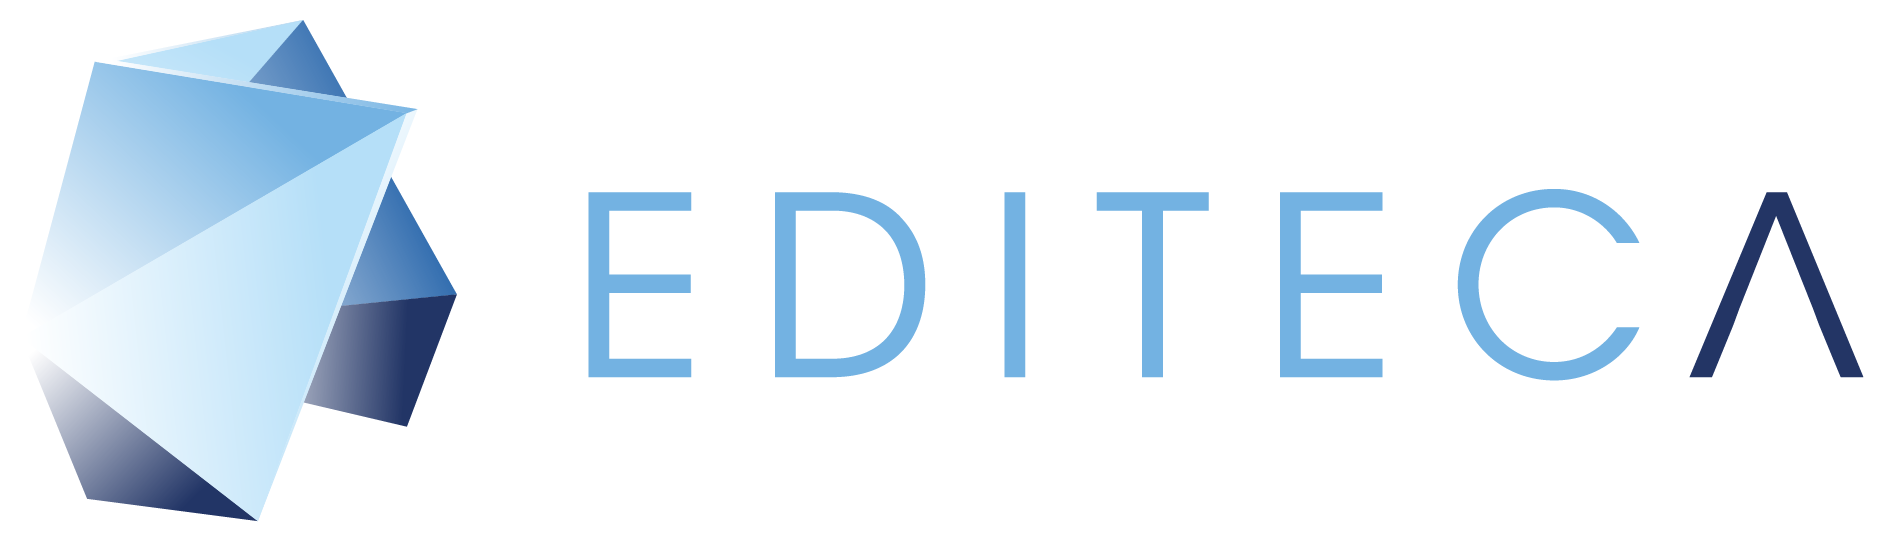 Logo de Editeca